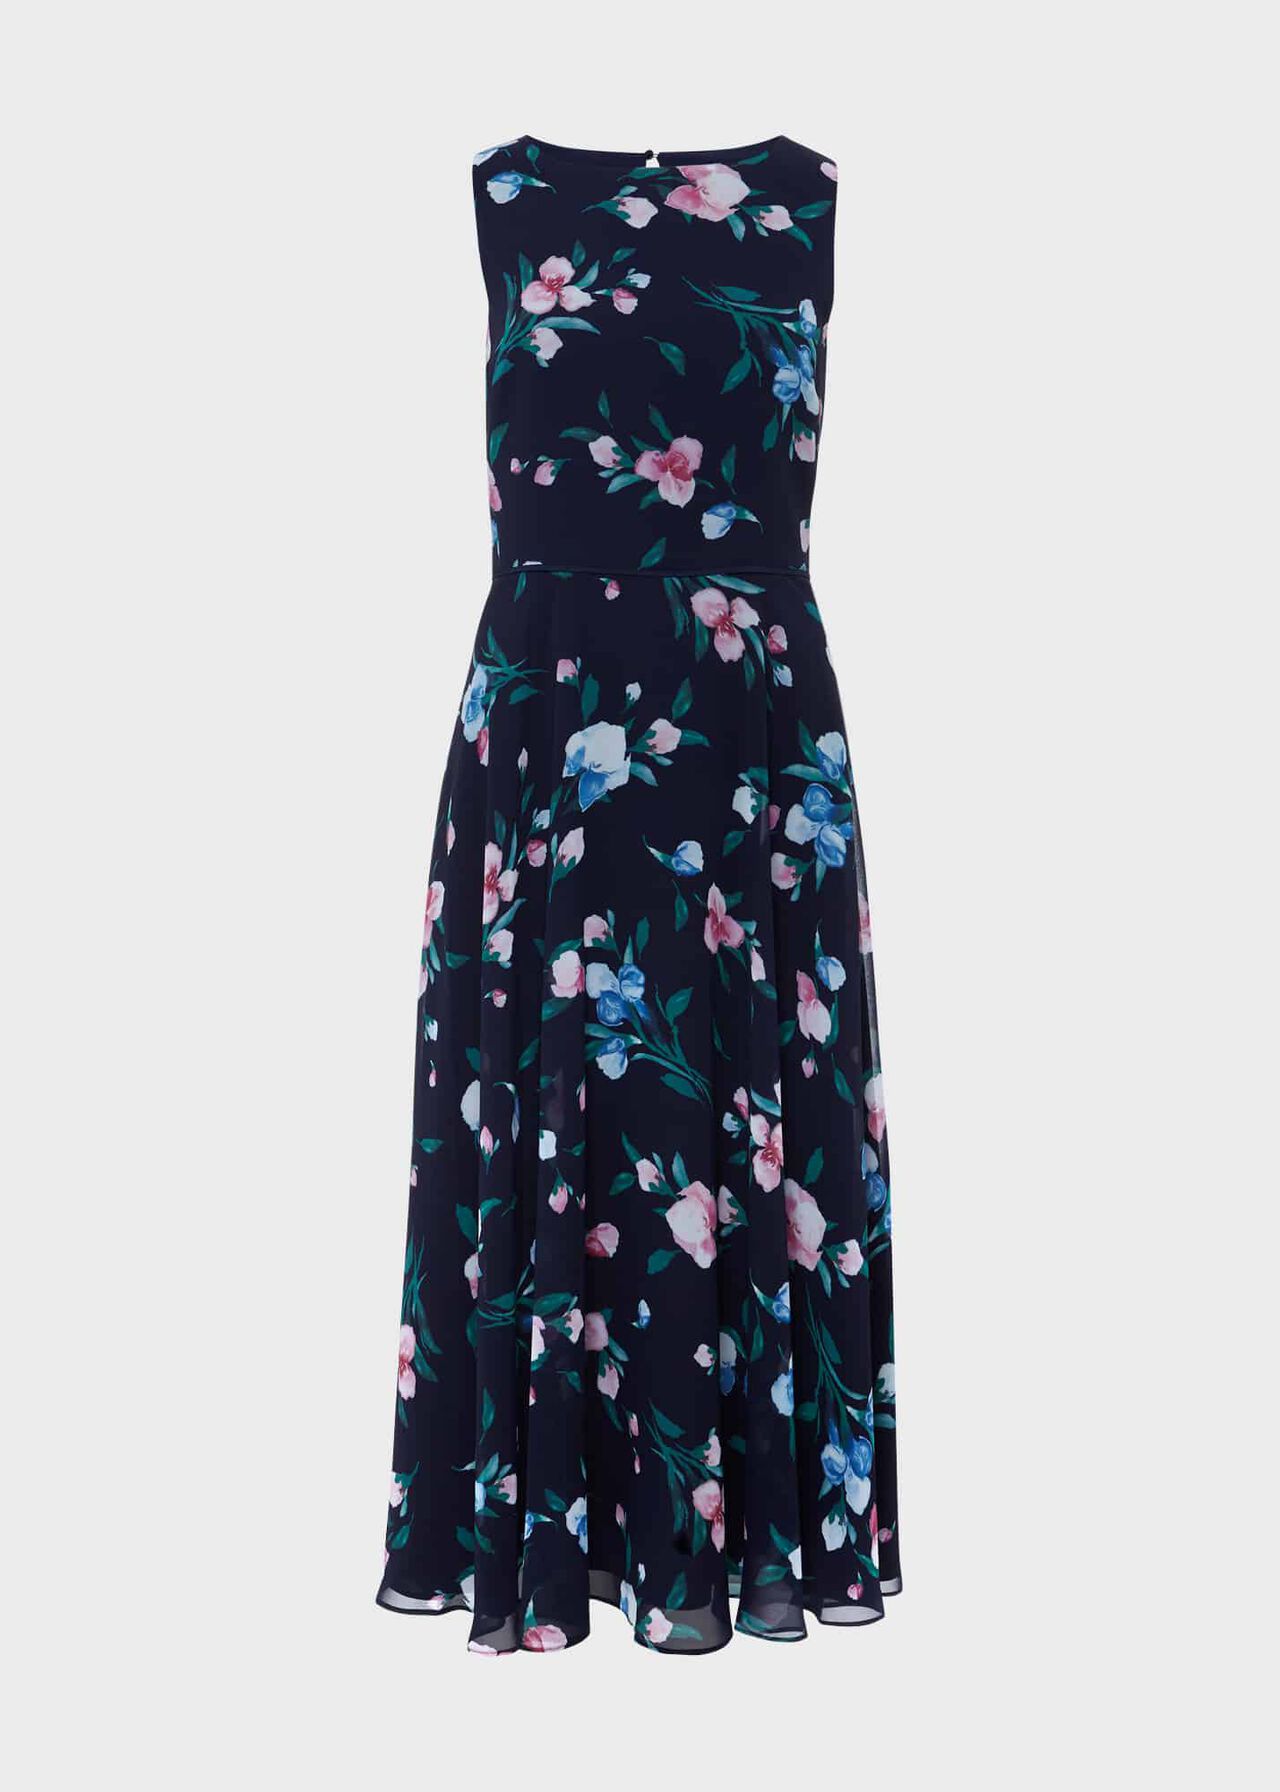 Carly Floral Midi Dress, Navy Multi, hi-res